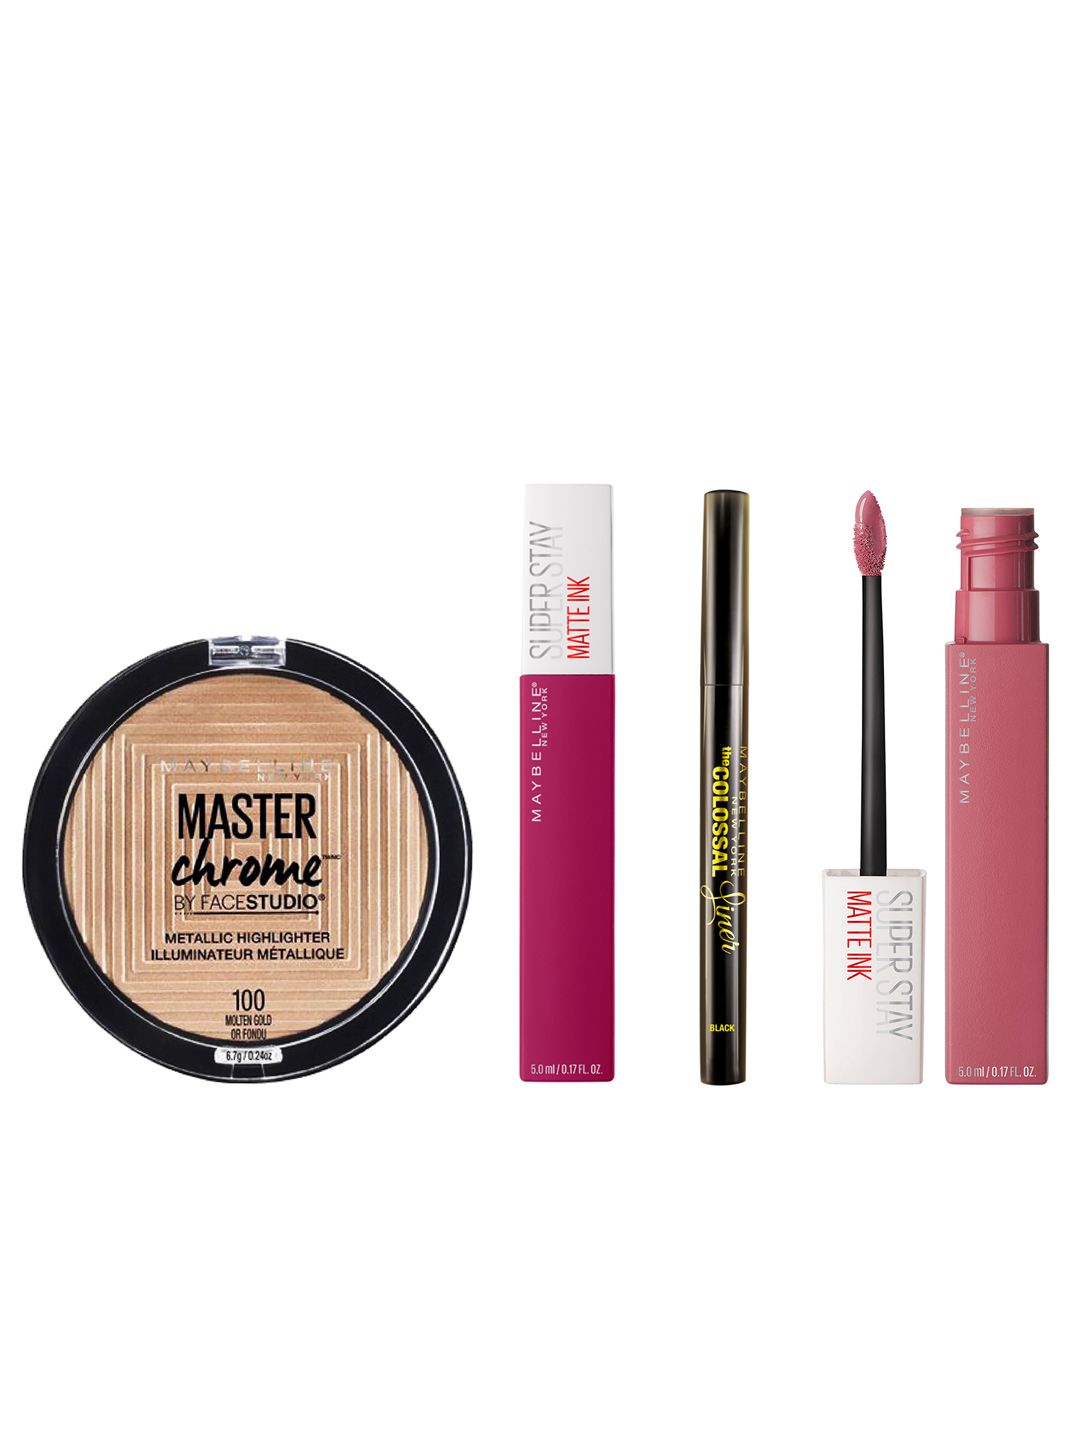 Maybelline New York Set Of Liquid Lipsticks - Master Chrome Highlighter - Colossal Liner Price in India